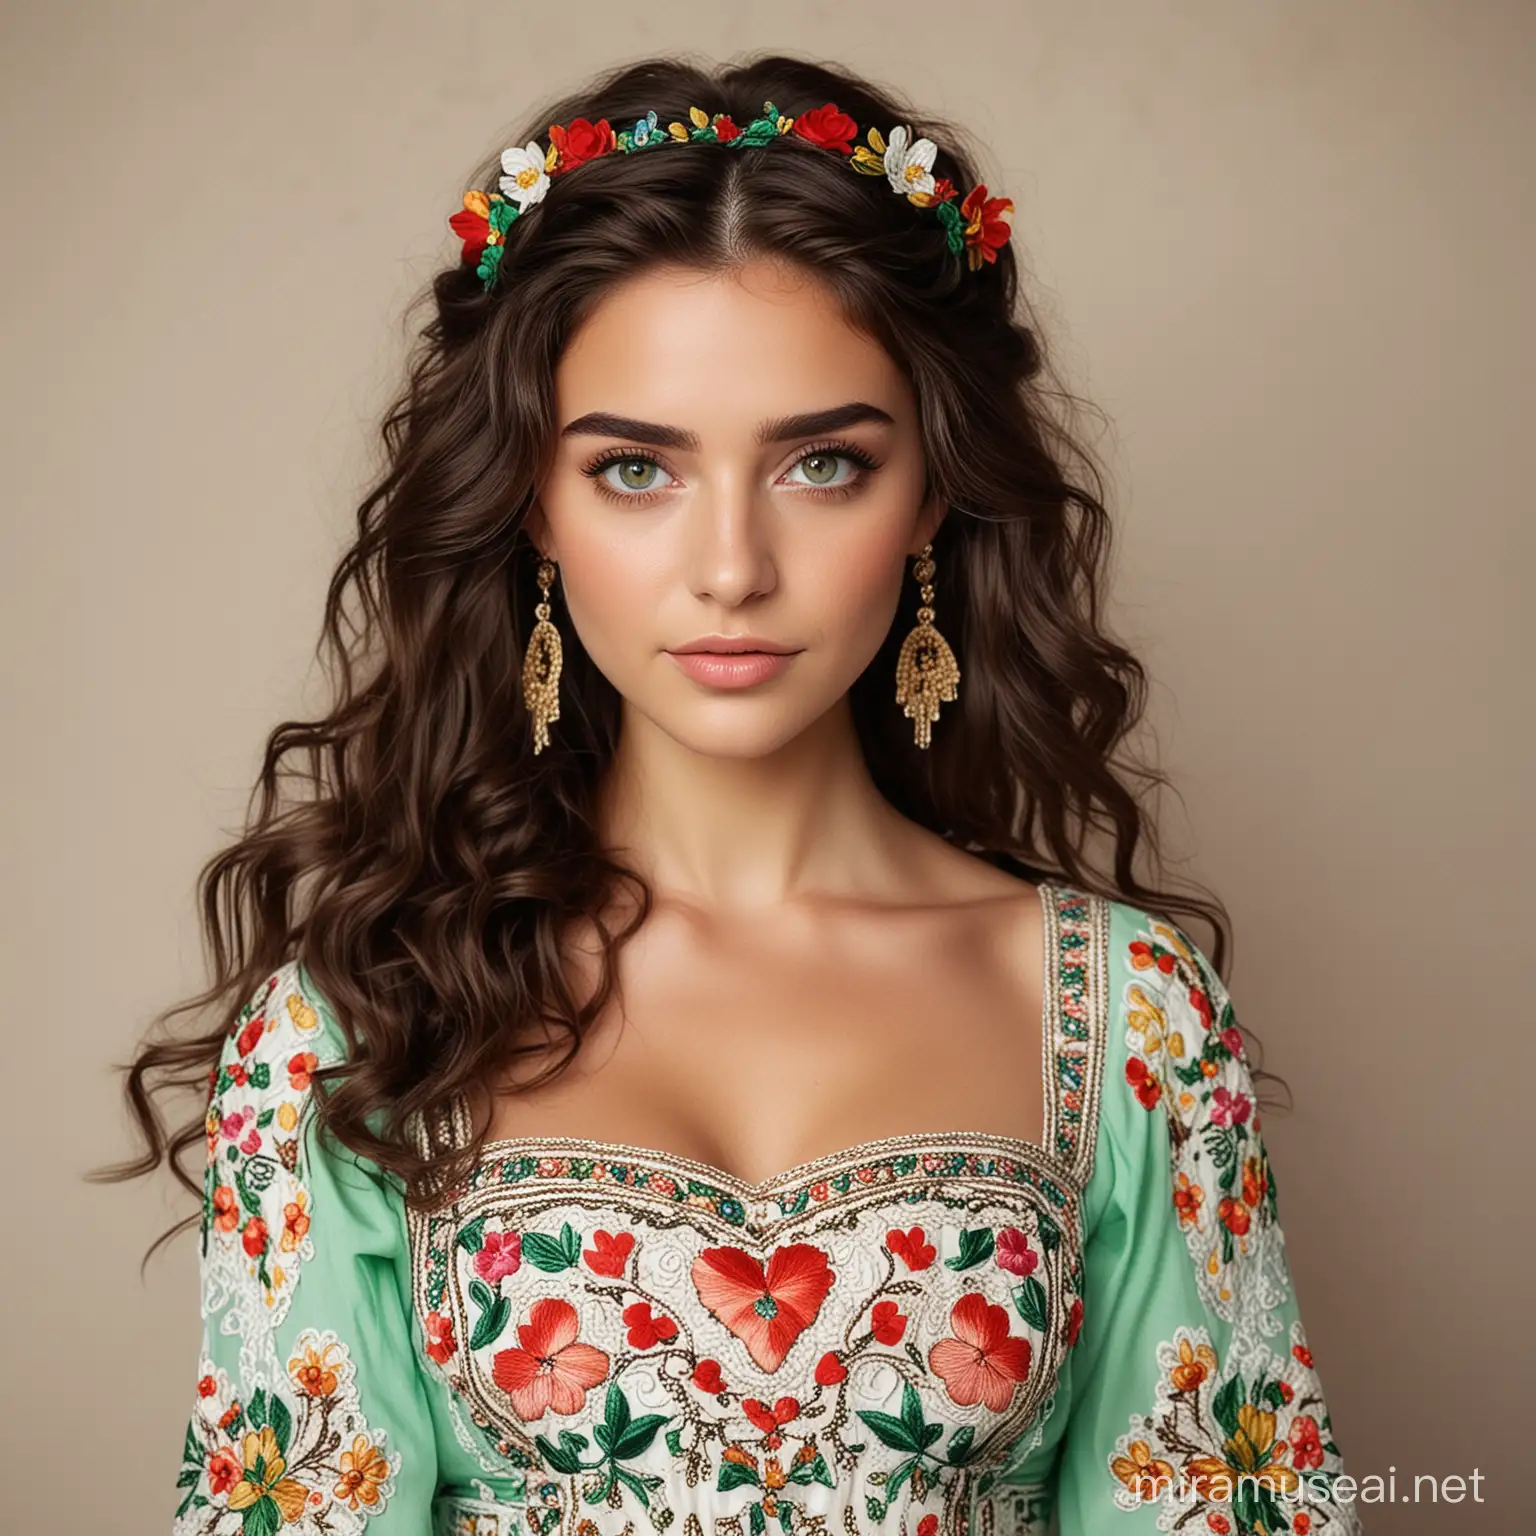 a very beautiful greek goddess dark brown wavy hair half up heart shaped face green eyes wearing a colorful embroidery boho dress